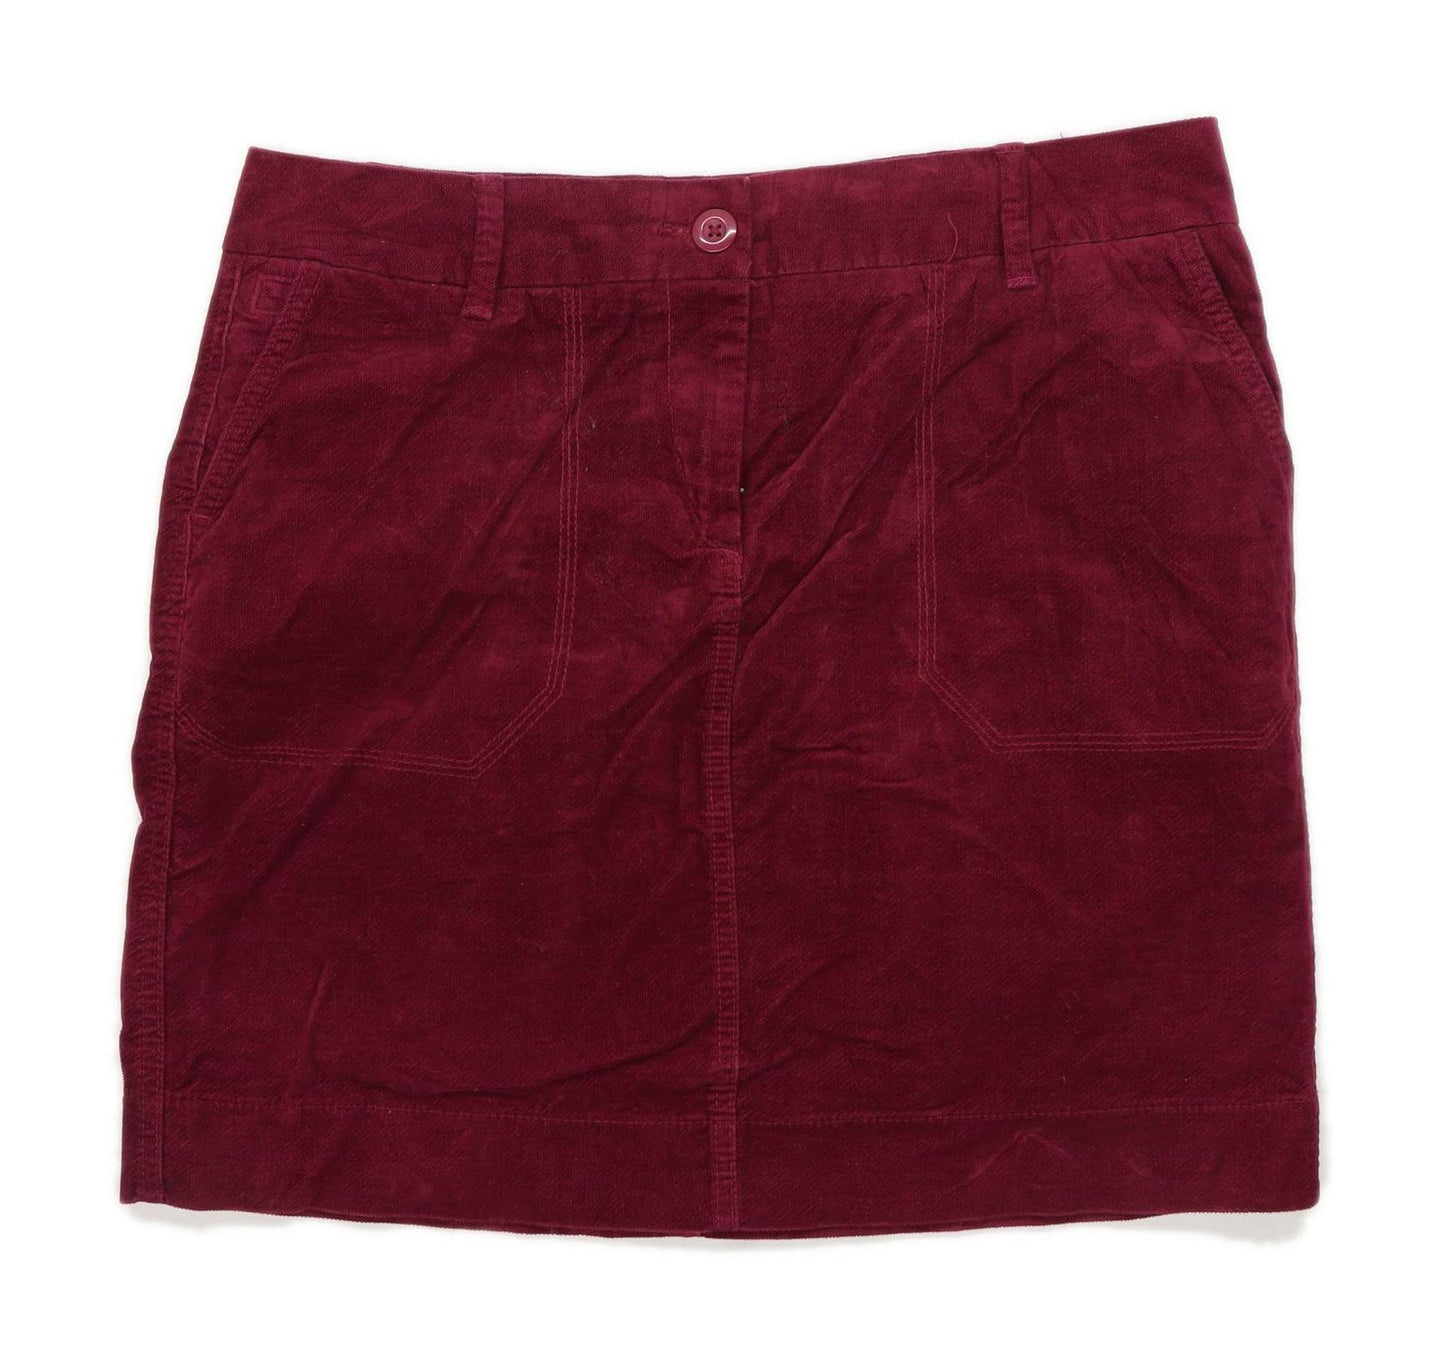 Marks & Spencer Womens Size W34 Cotton Blend Red Skirt (Regular)